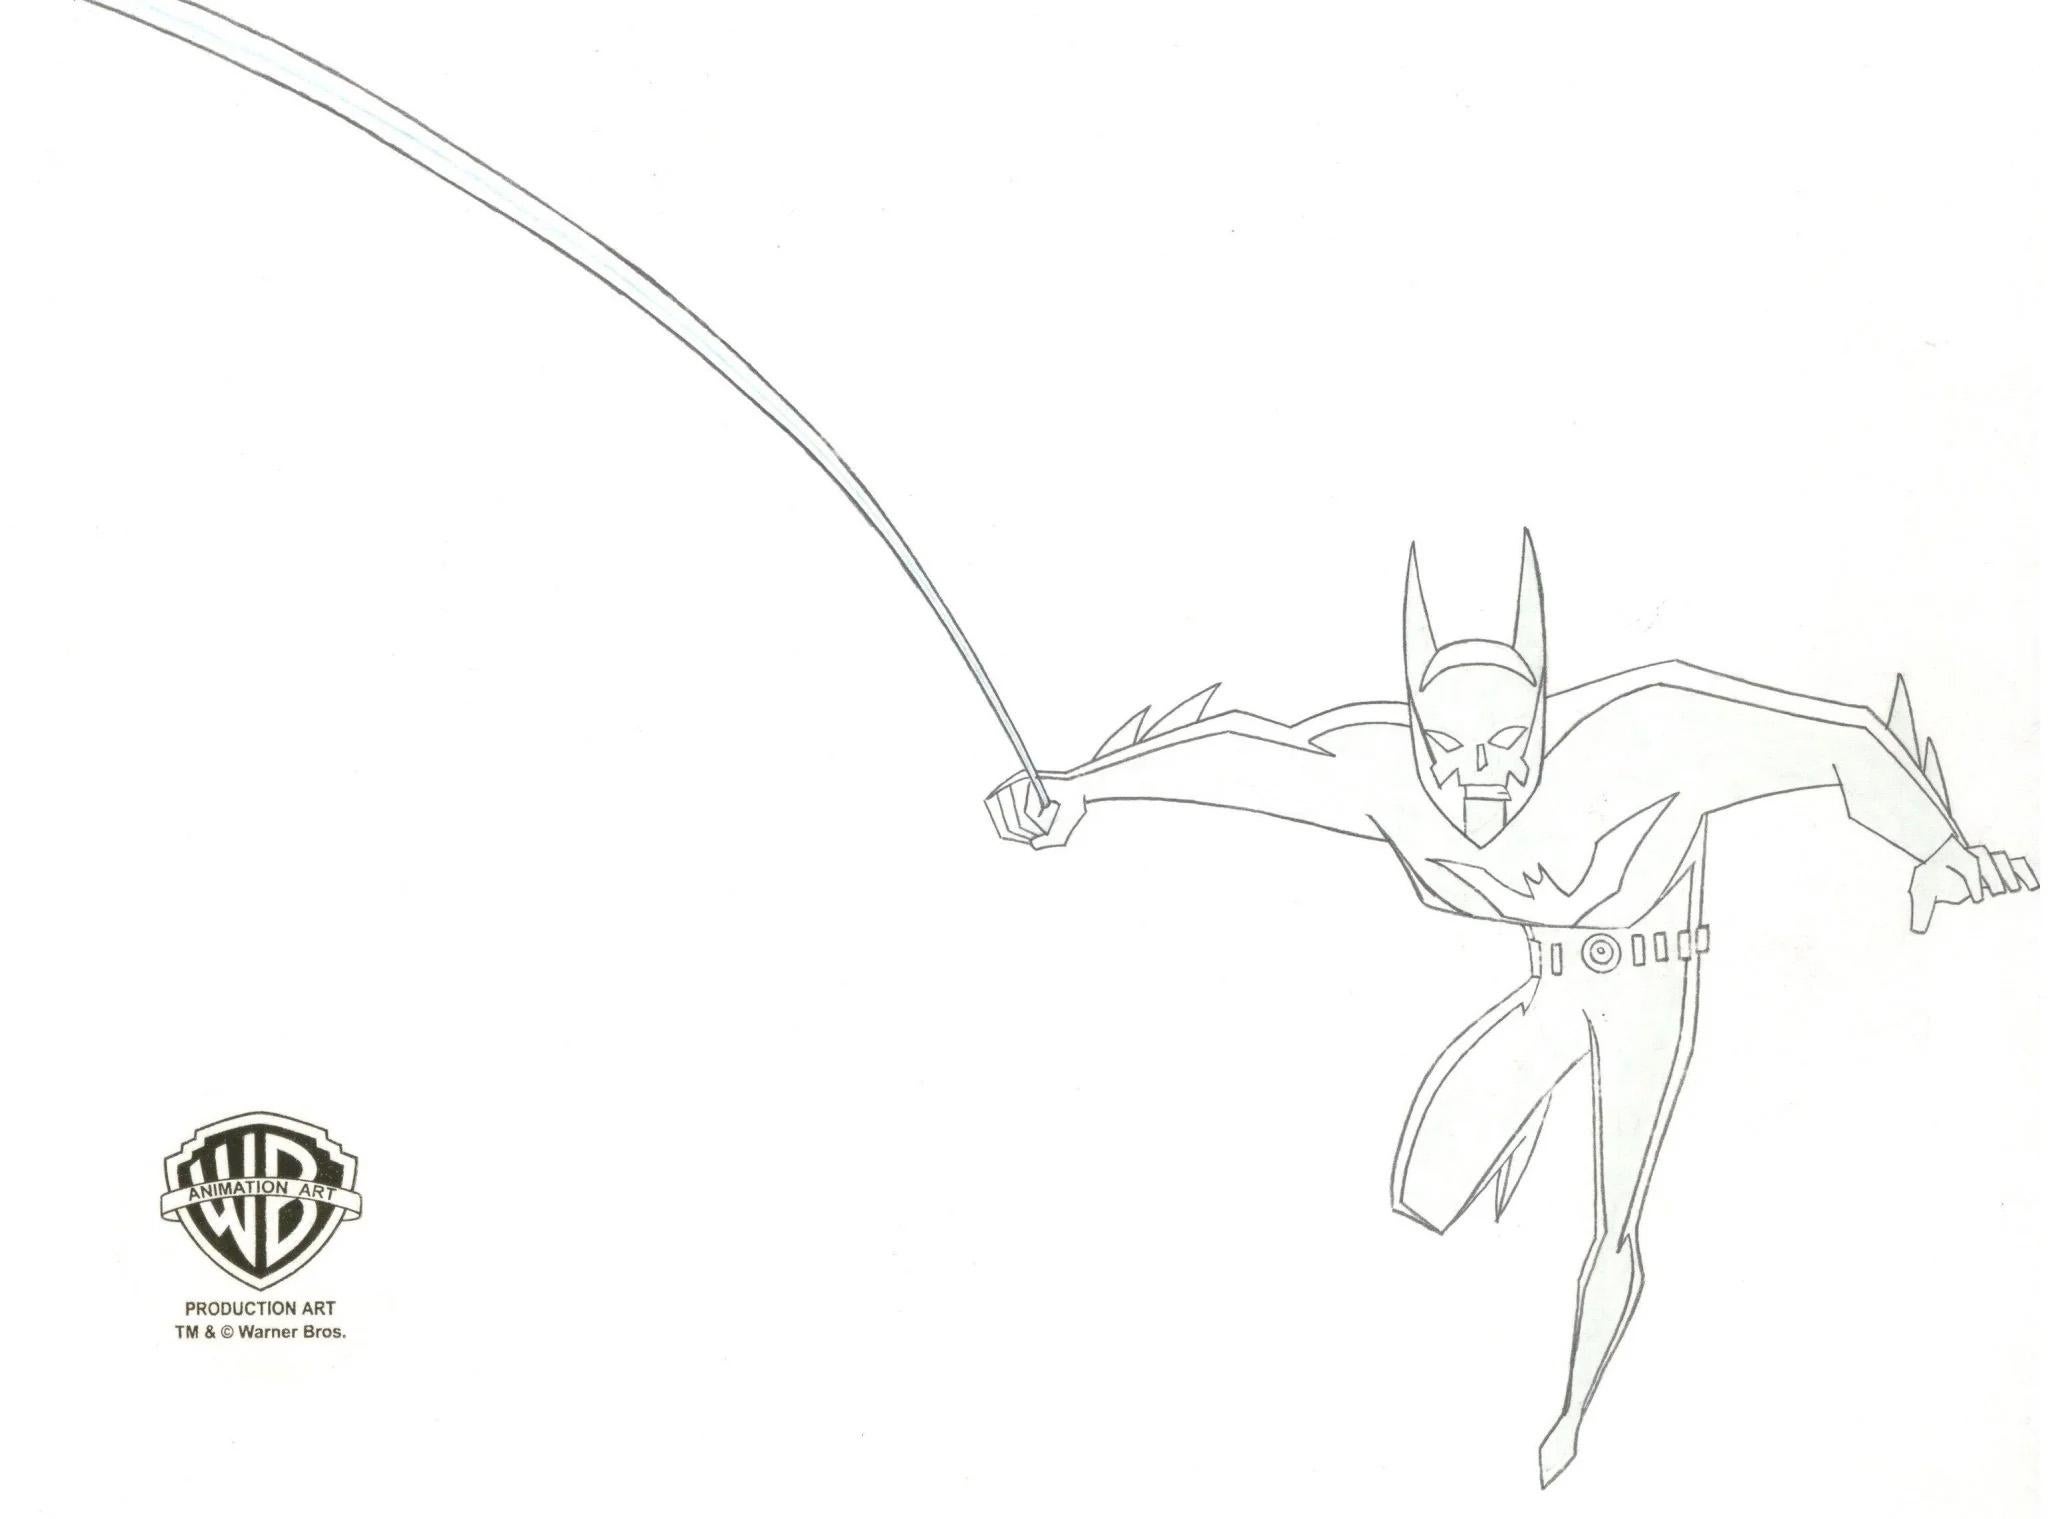 Batman Beyond Original Production Cel with Matching Drawing: Batman - Pop Art Art by DC Comics Studio Artists